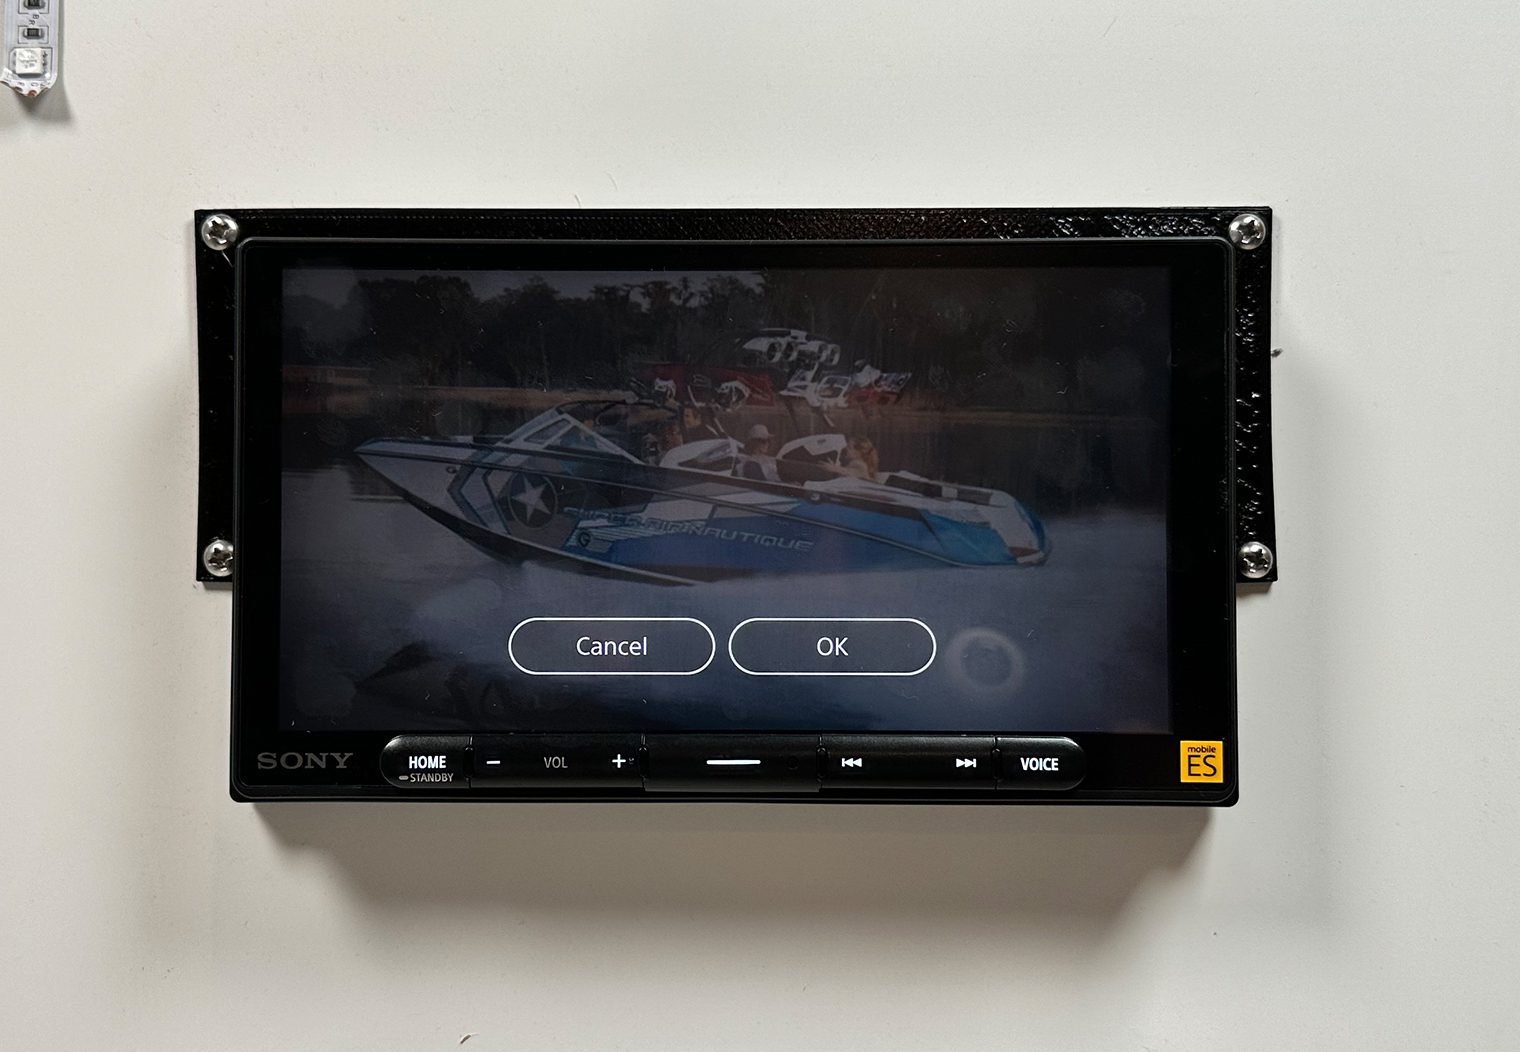 Sony XAV-9000ES custom background image confirm